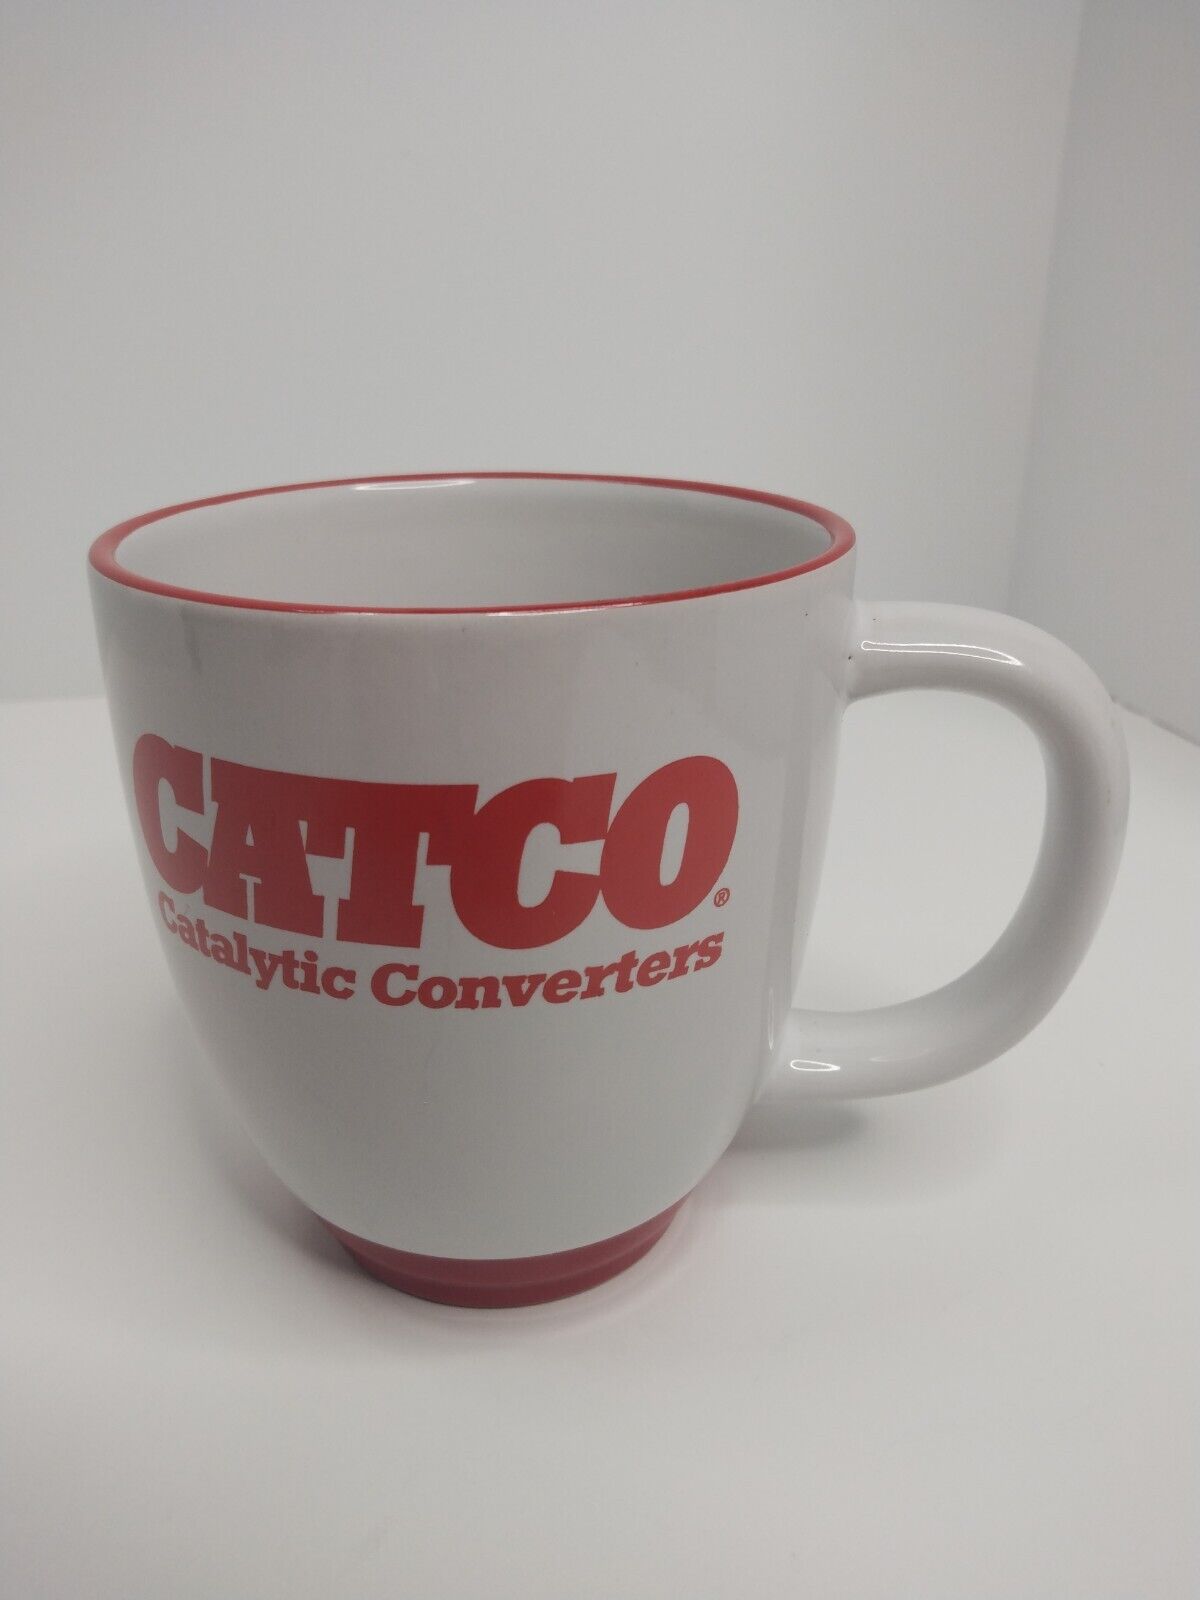 CATCO Catalytic Converters Coffee Mug Cup Advertising 